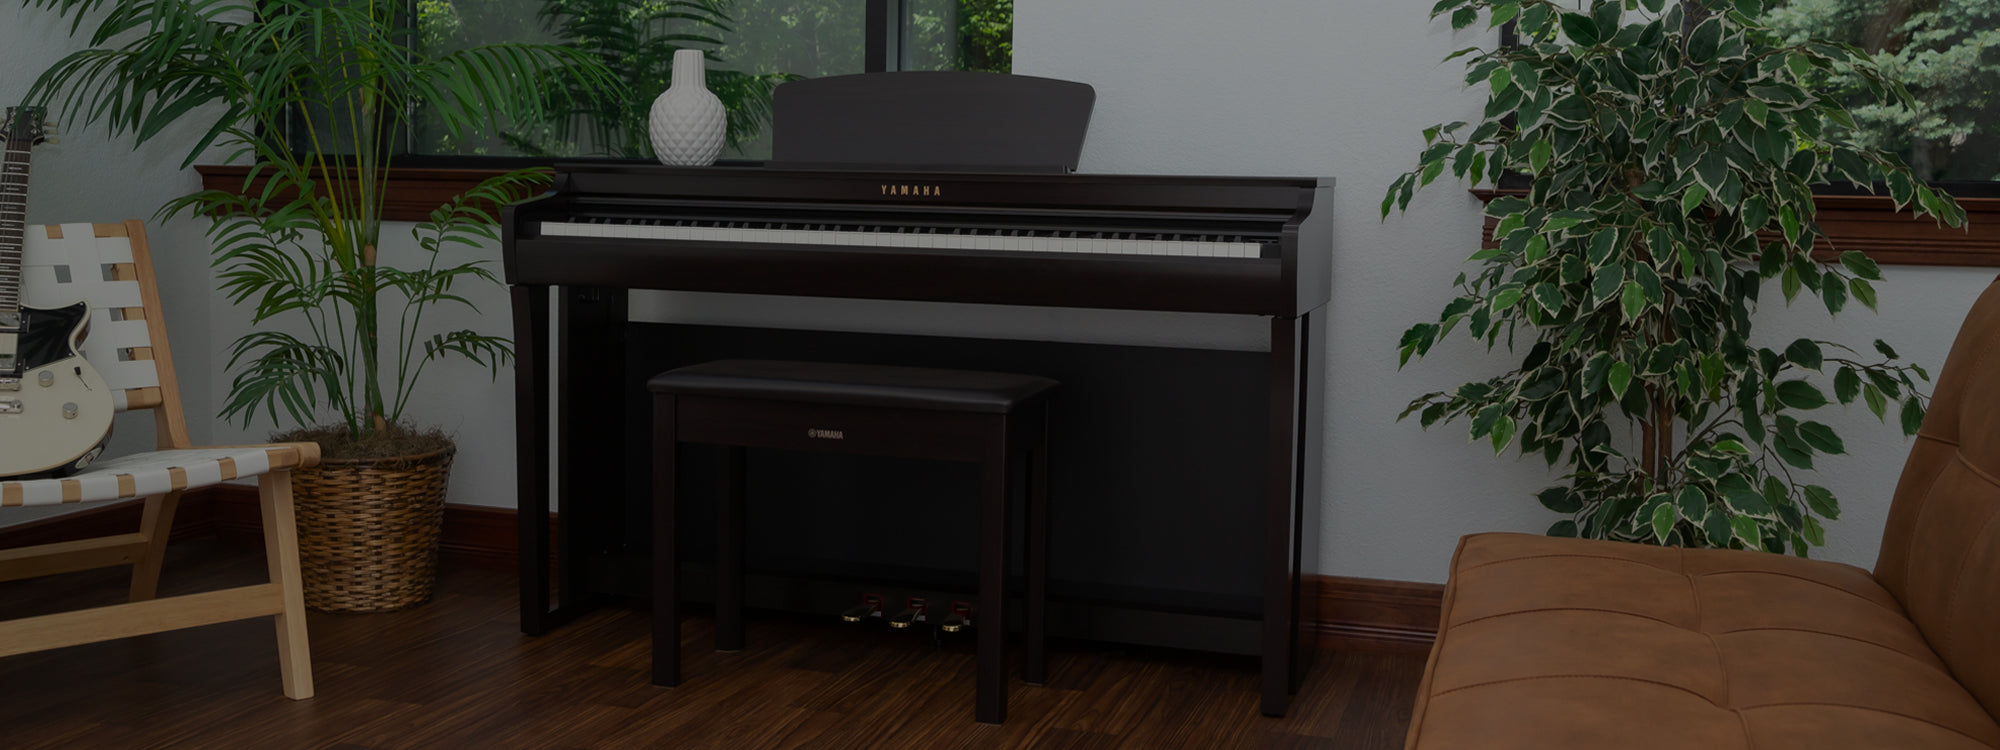 Casio CDP-S360 Compact Digital Piano - Black KEY ESSENTIALS BUNDLE – Kraft  Music